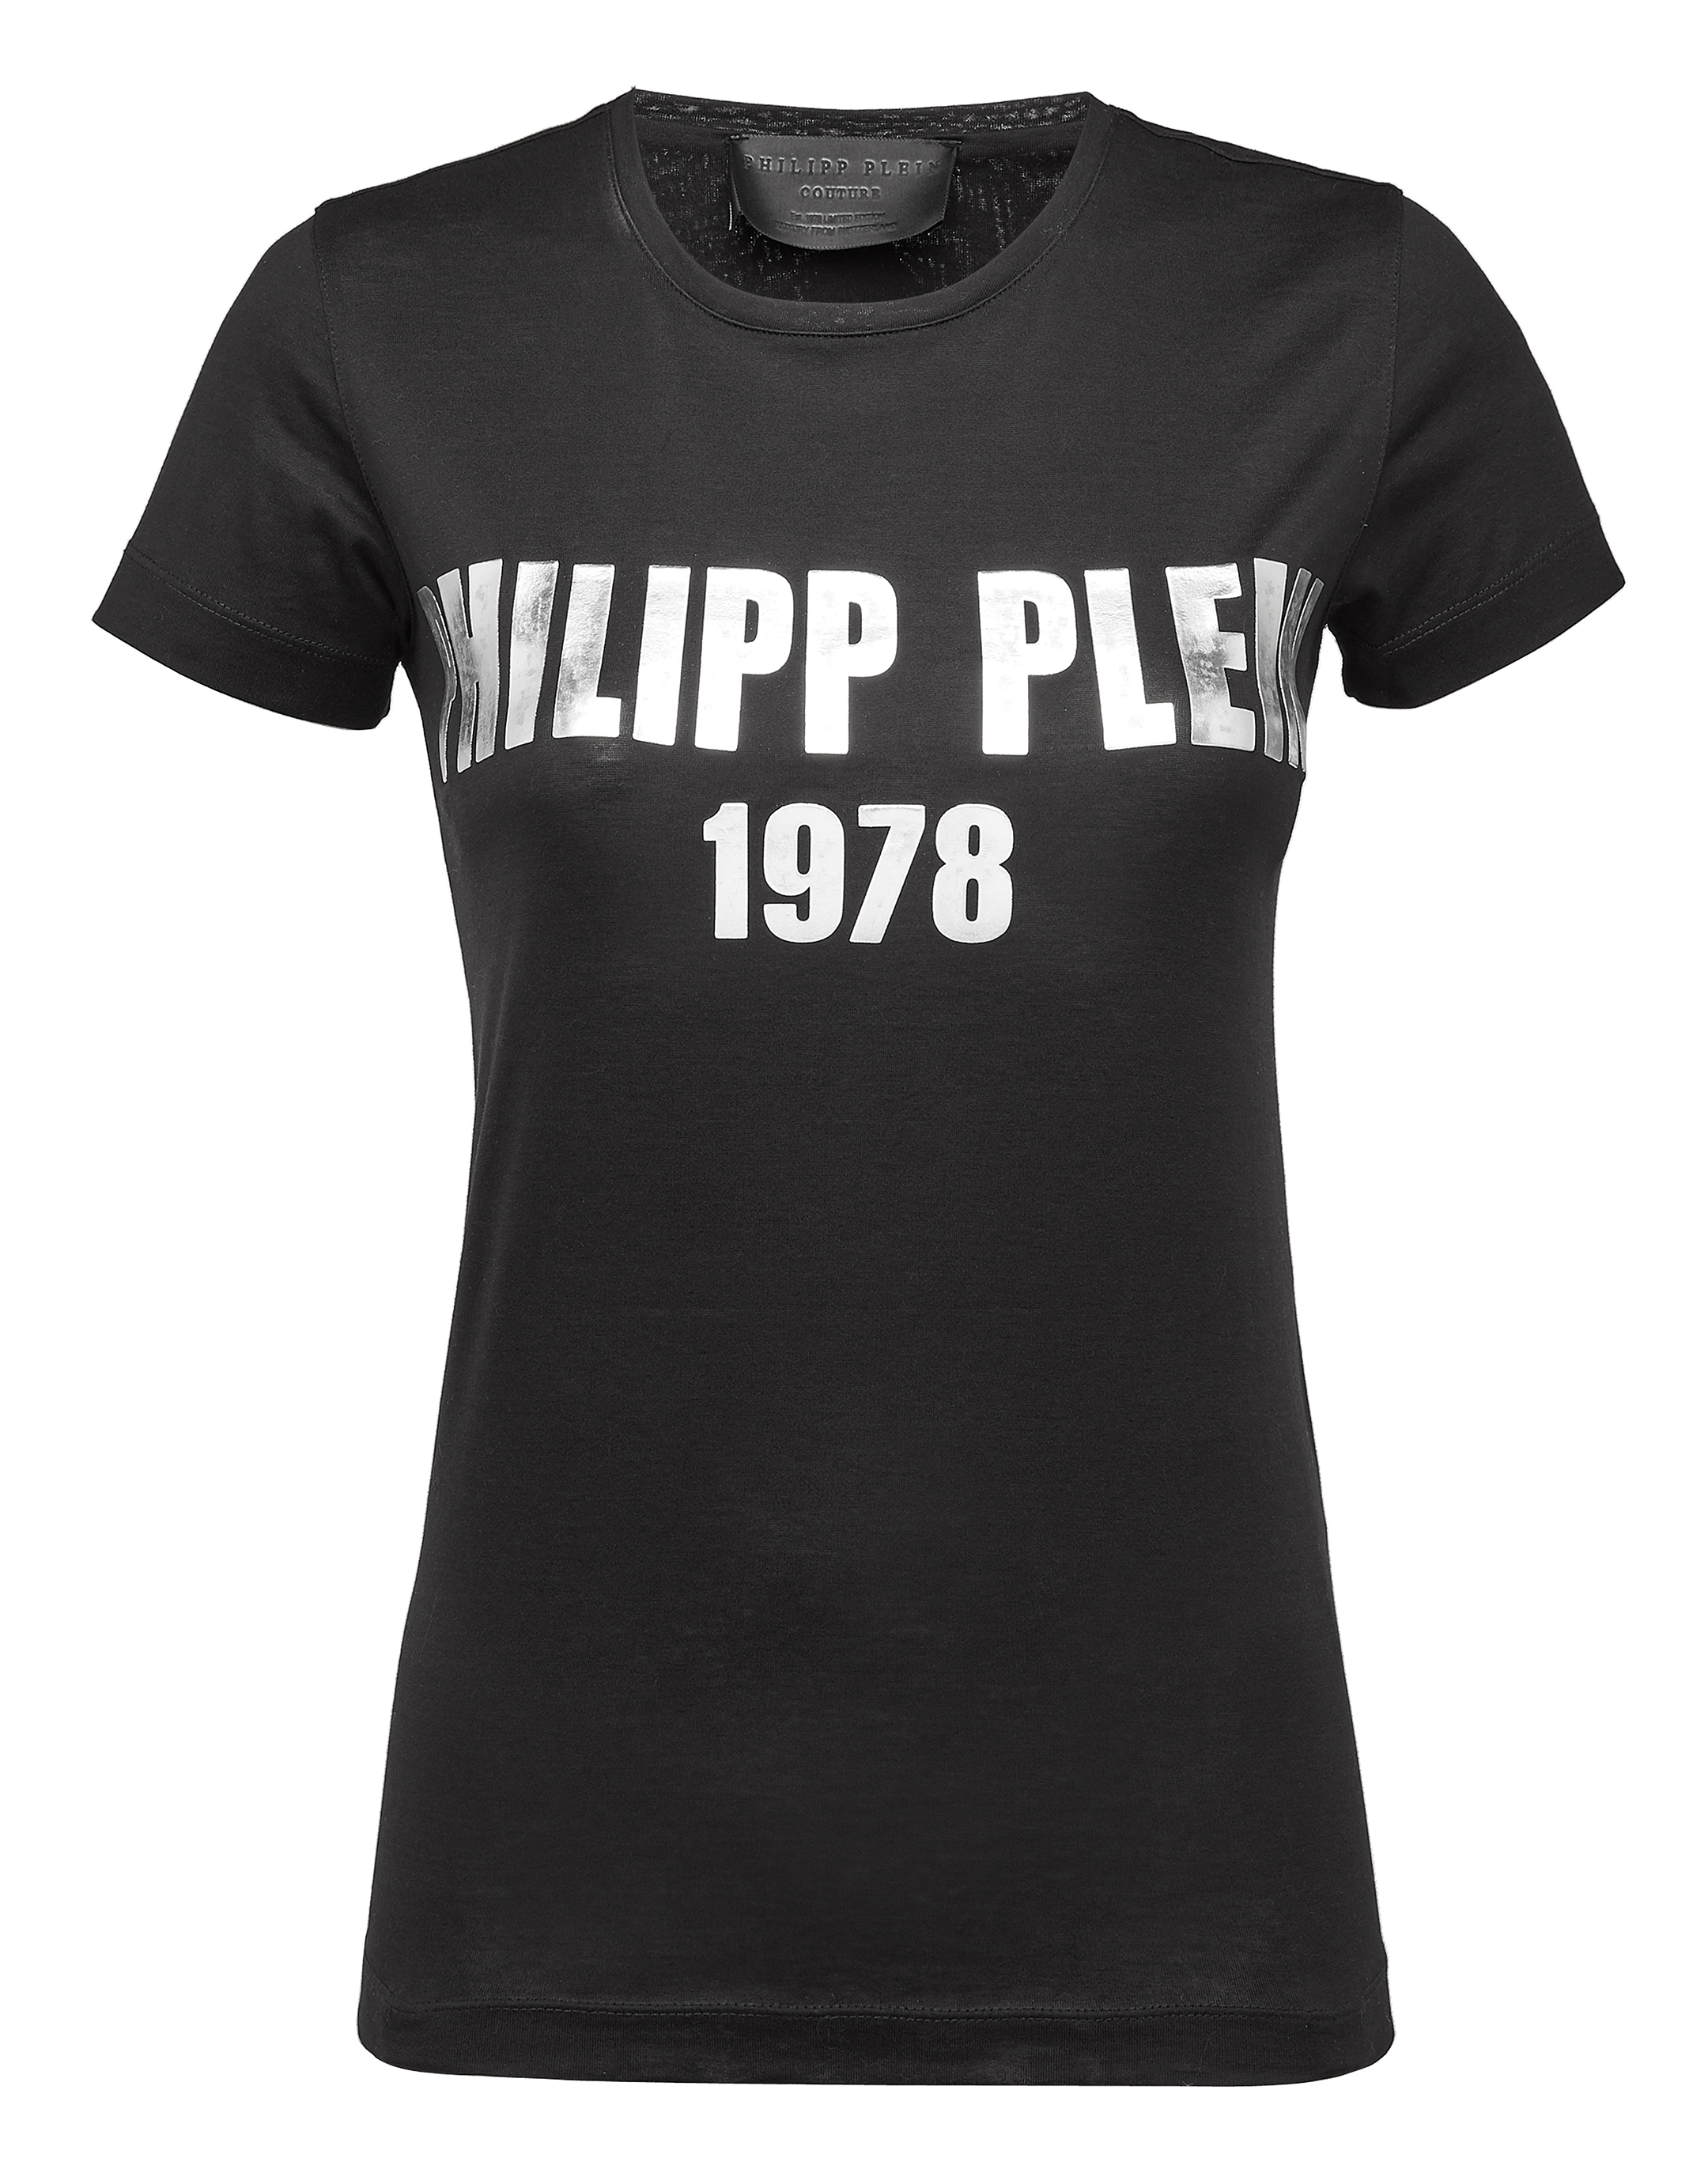 philipp plein 78 t shirt